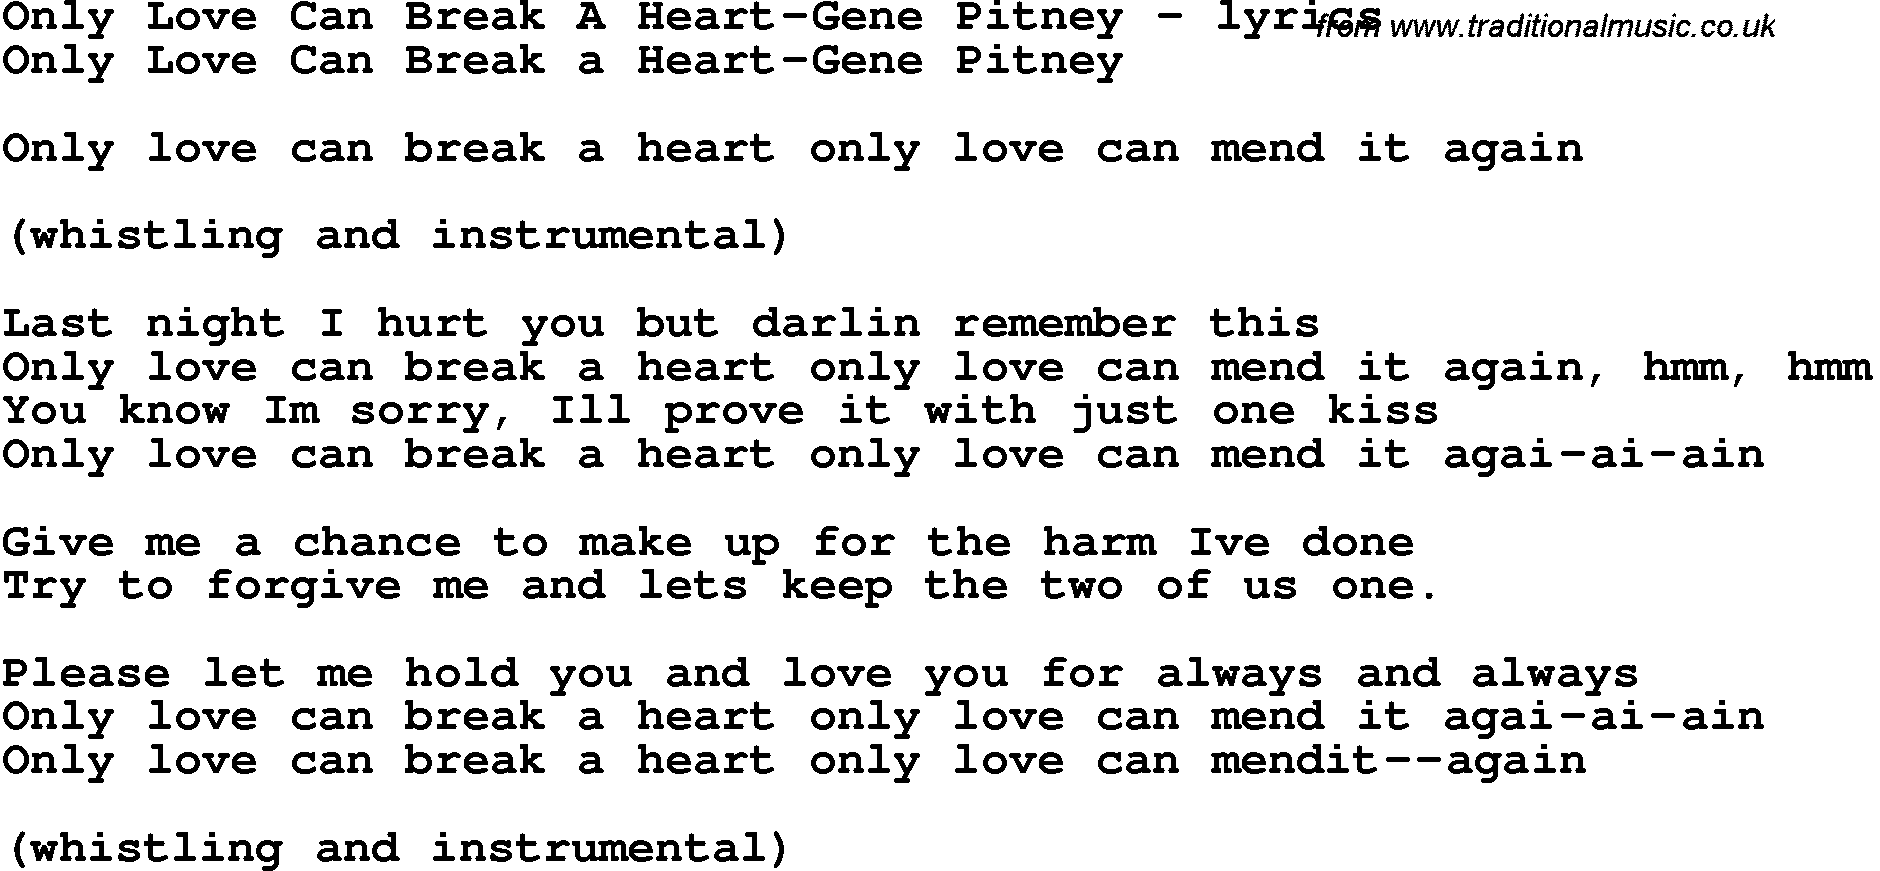 Love Song Lyrics for: Only Love Can Break A Heart-Gene Pitney